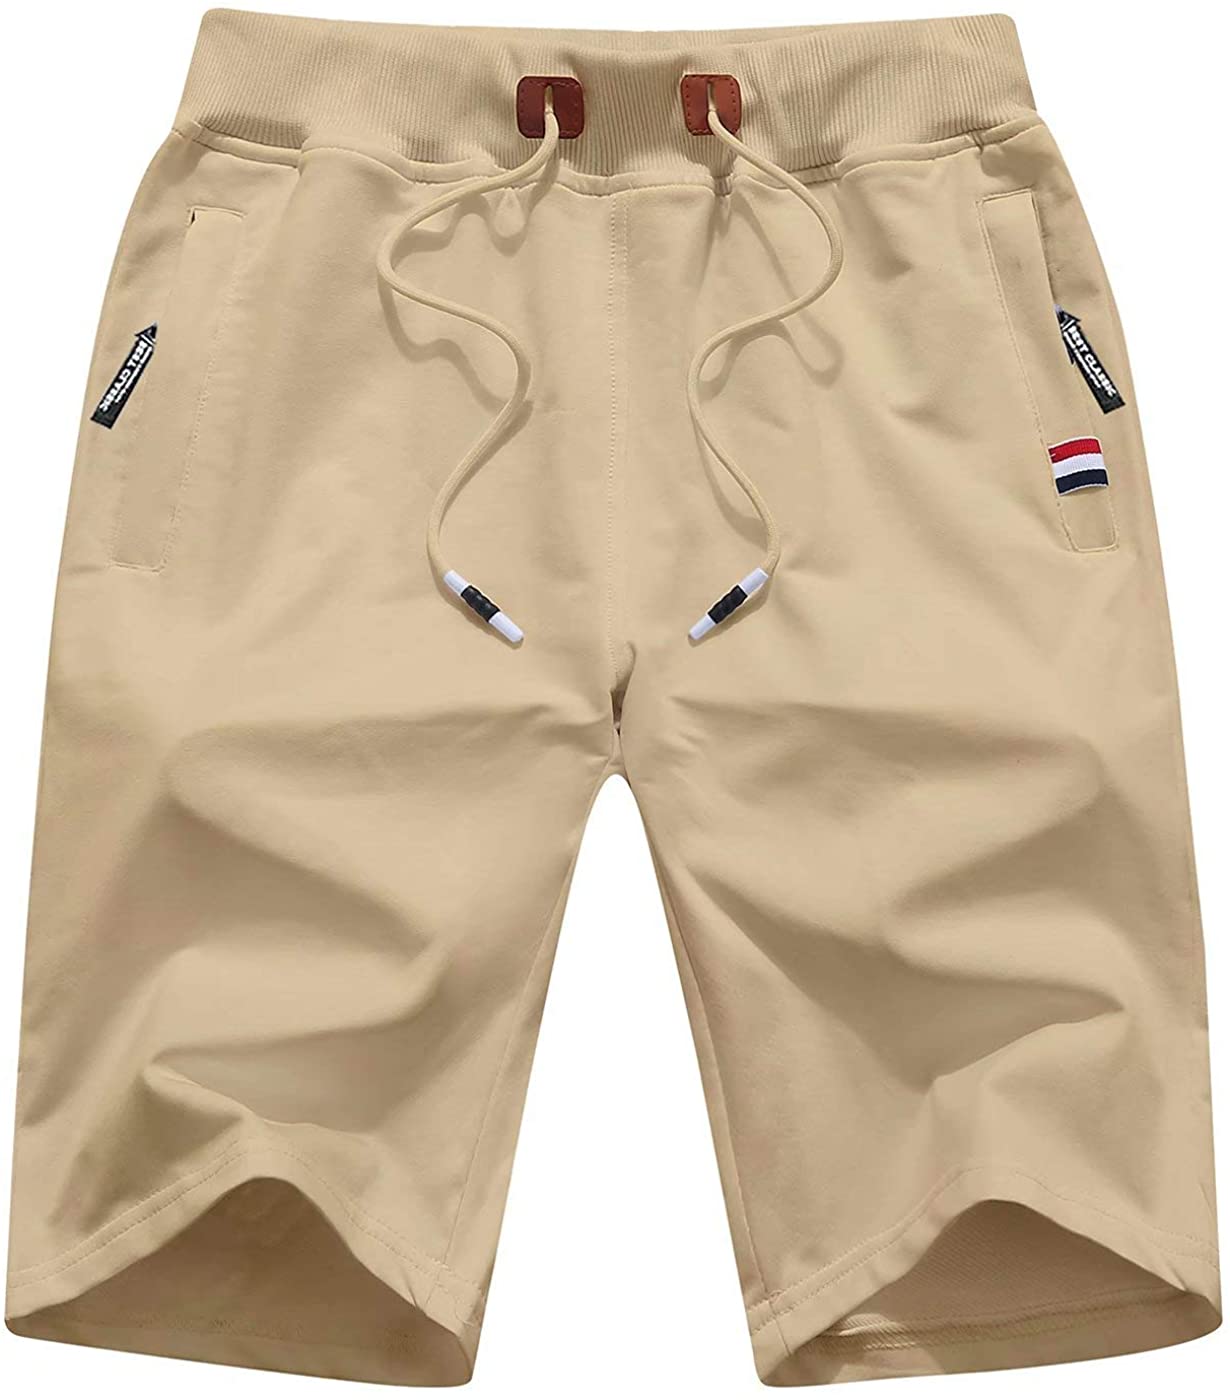 Tyhengta Mens Casual Shorts Elastic Jogger Shorts with Zipper Pockets